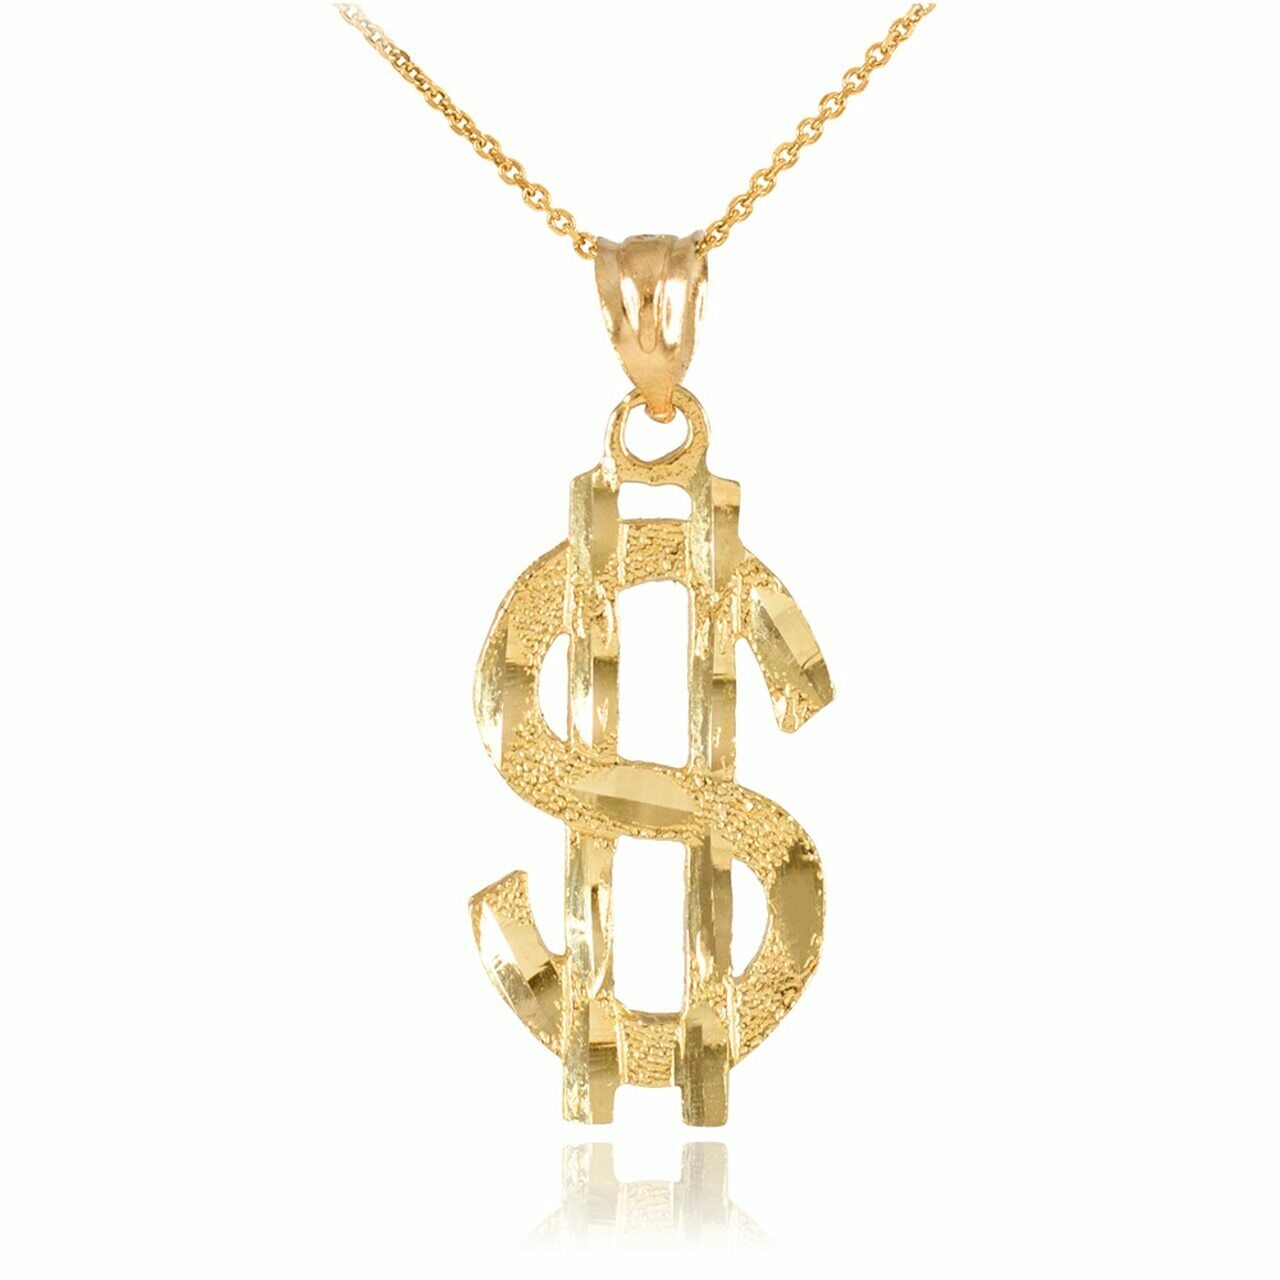 Solid Yellow Gold 14K Dollar Sign Money Pendant Necklace Baller Pimp Bling Bling